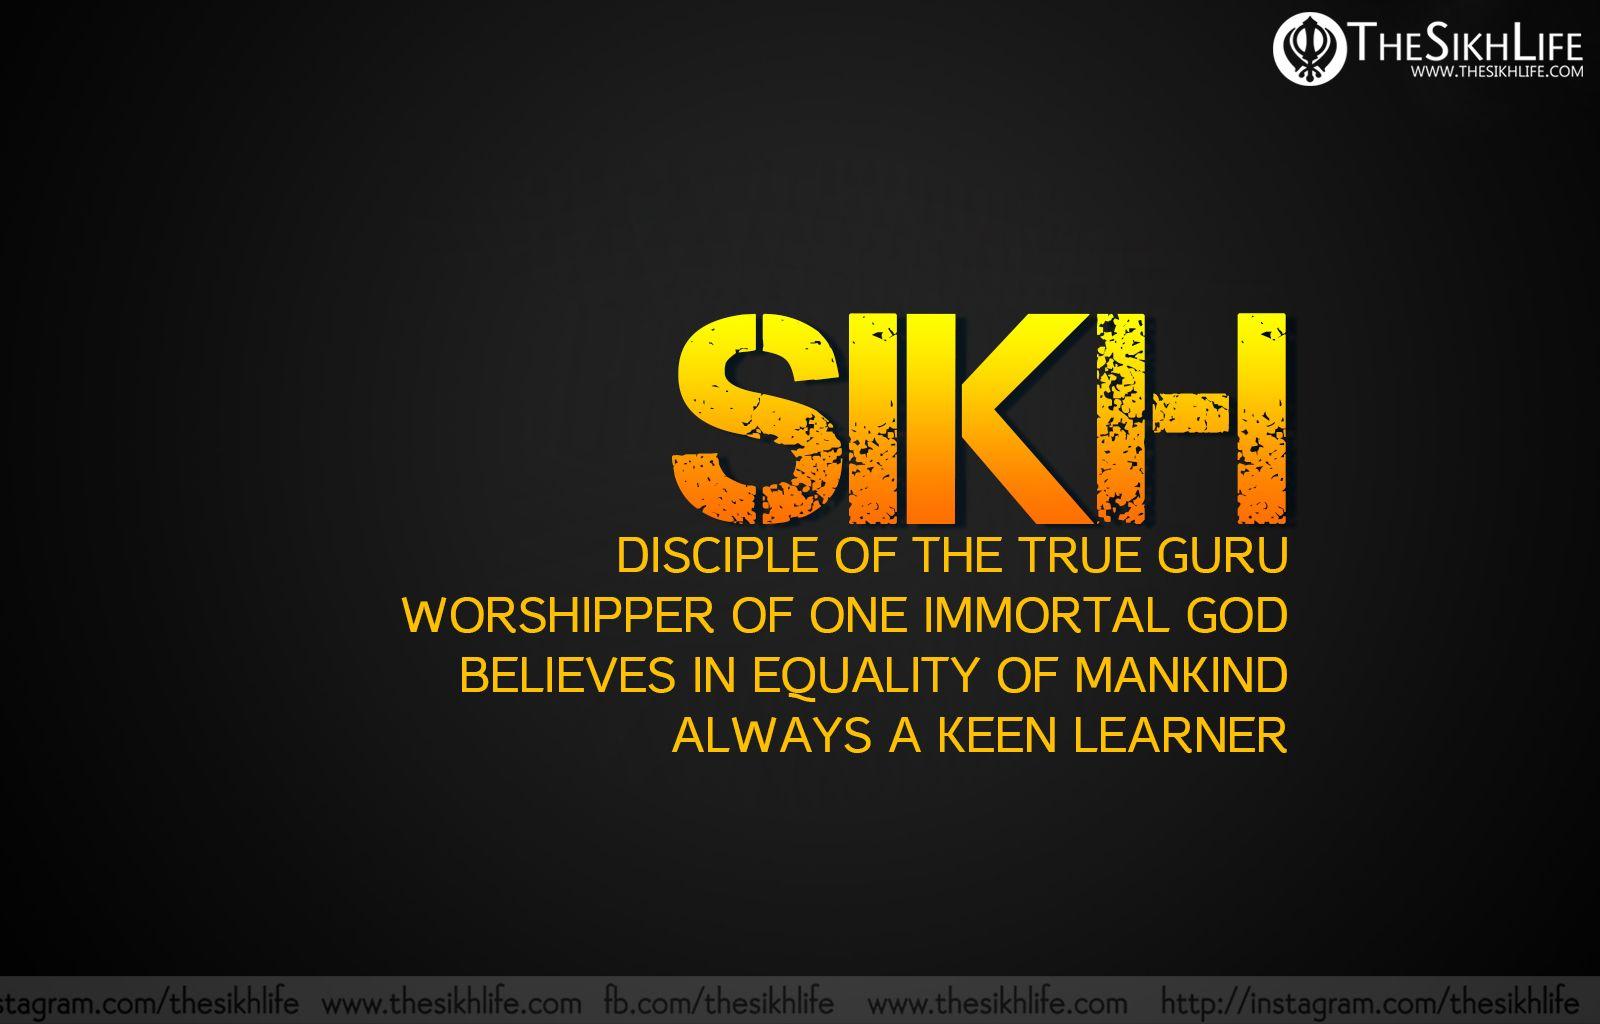 The Sikhism Computer Wallpaper